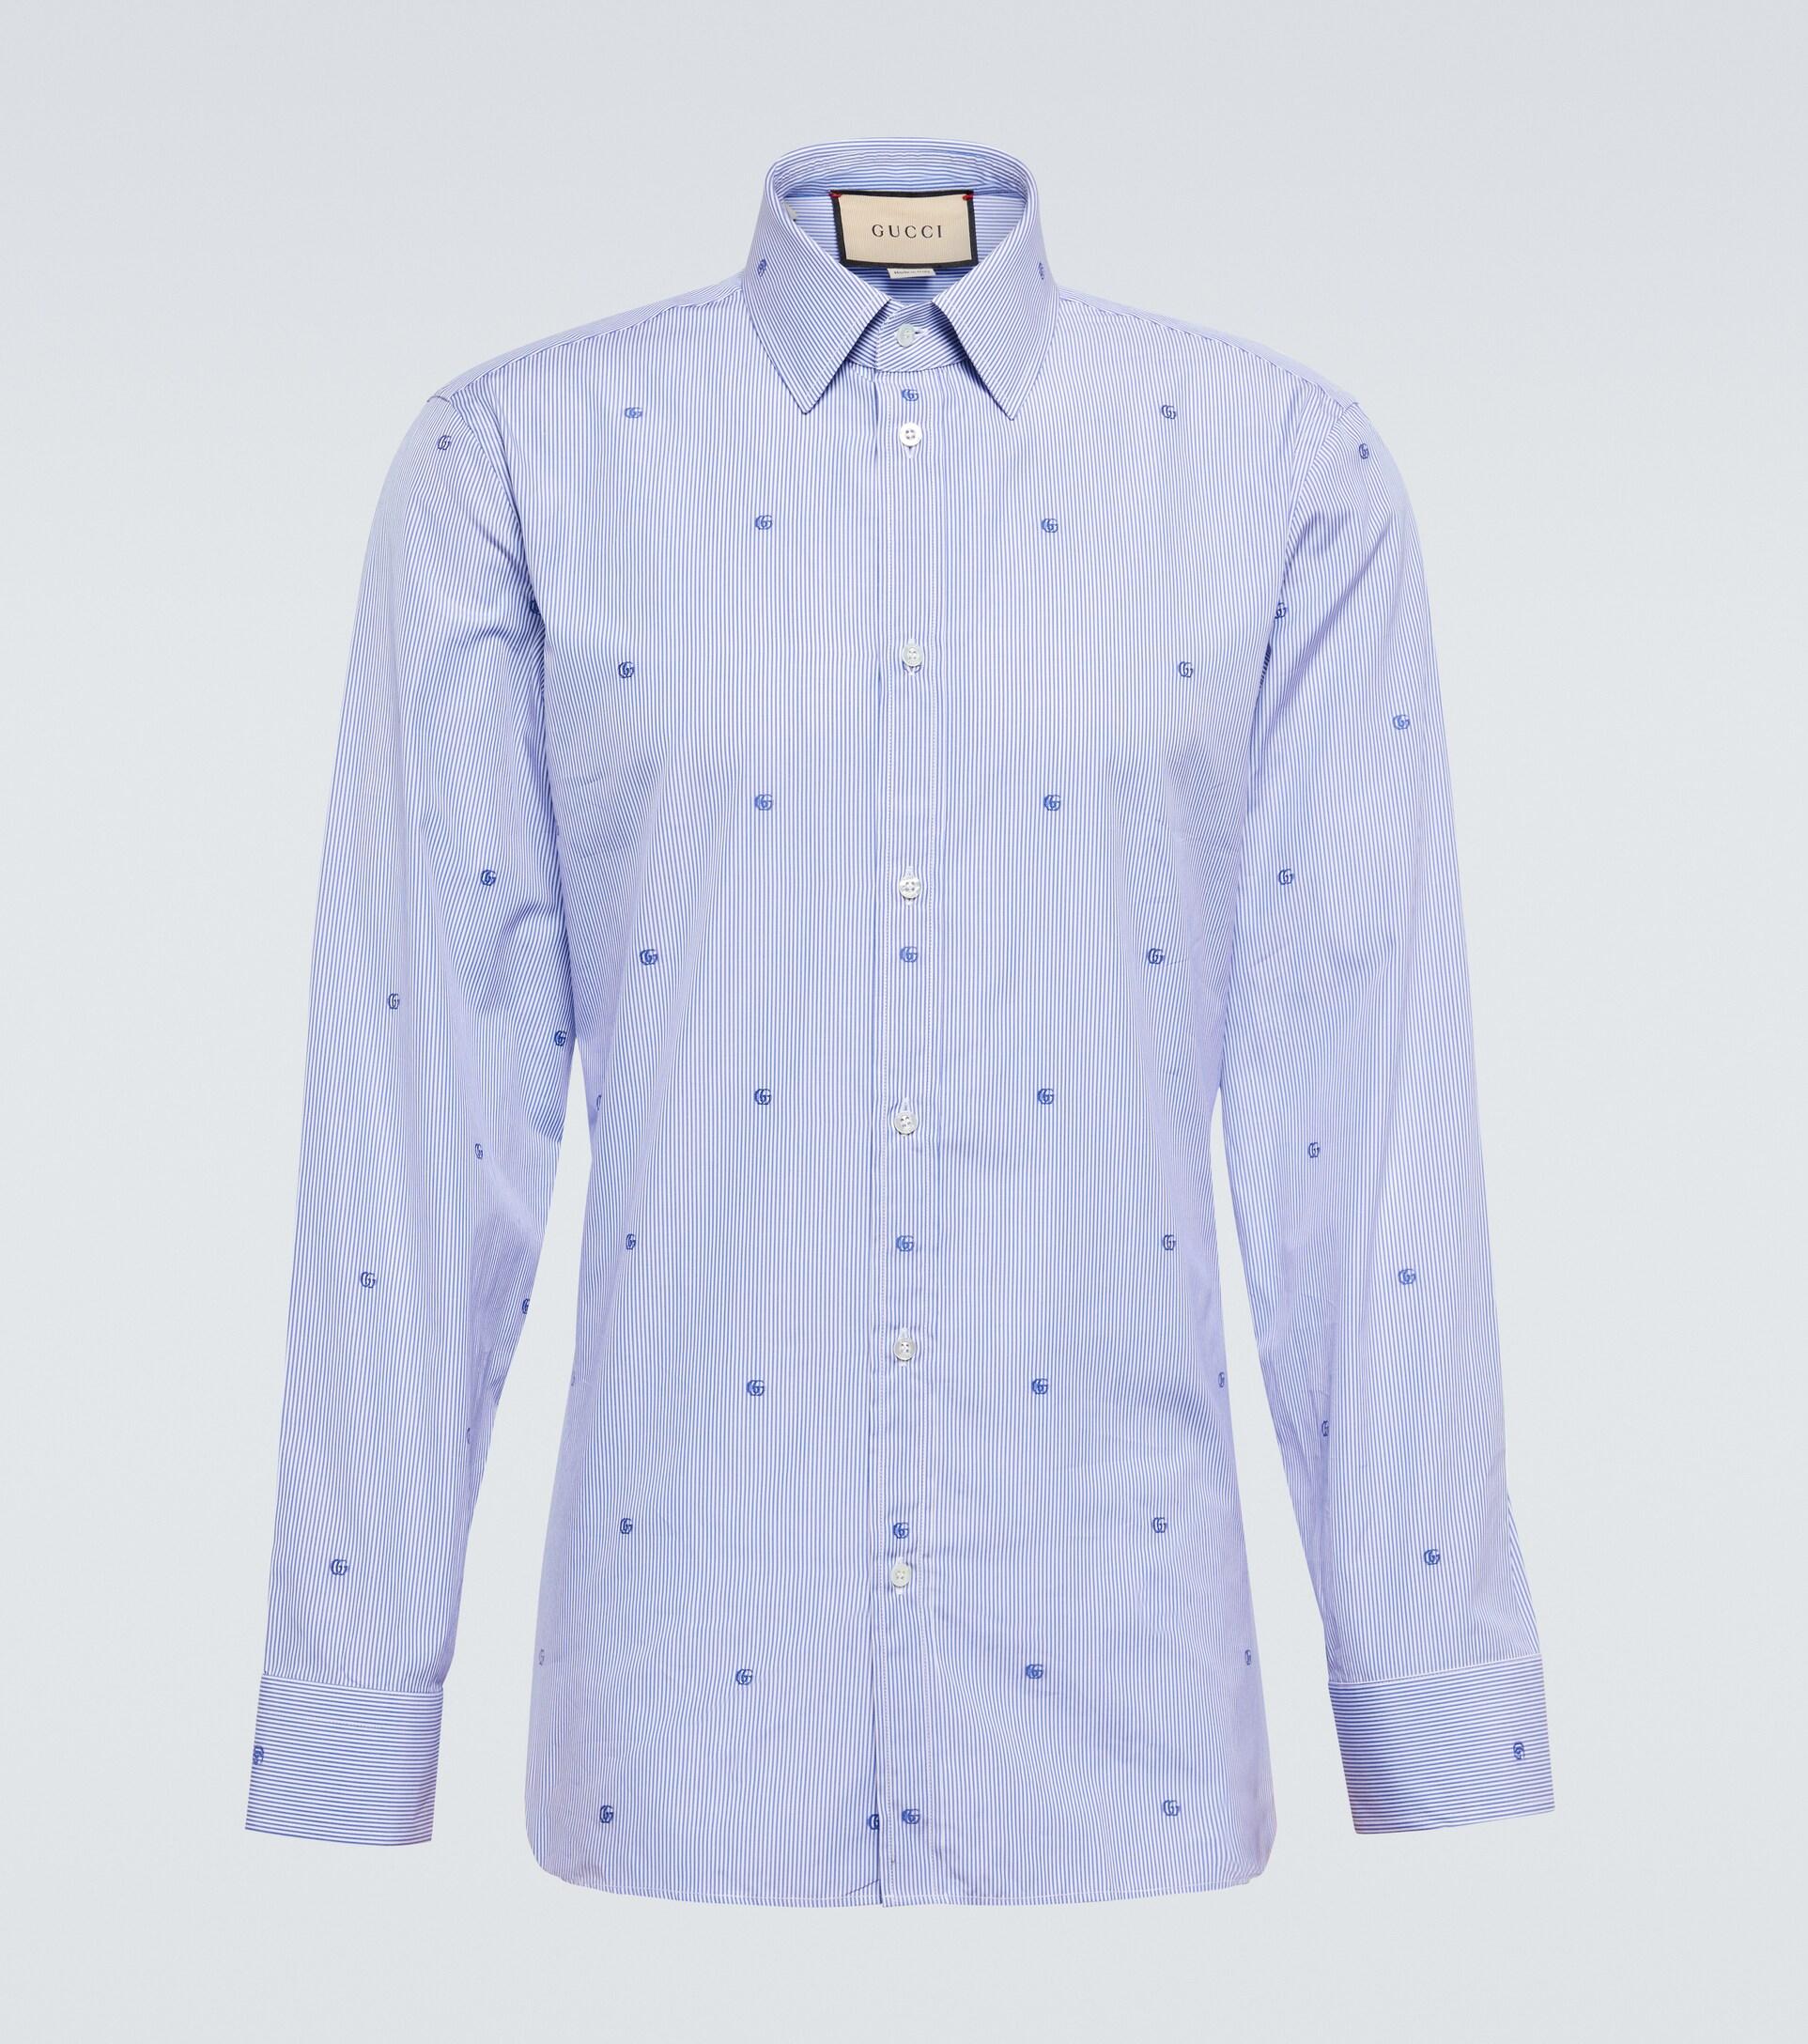 GUCCI White/blue striped oversize shirt